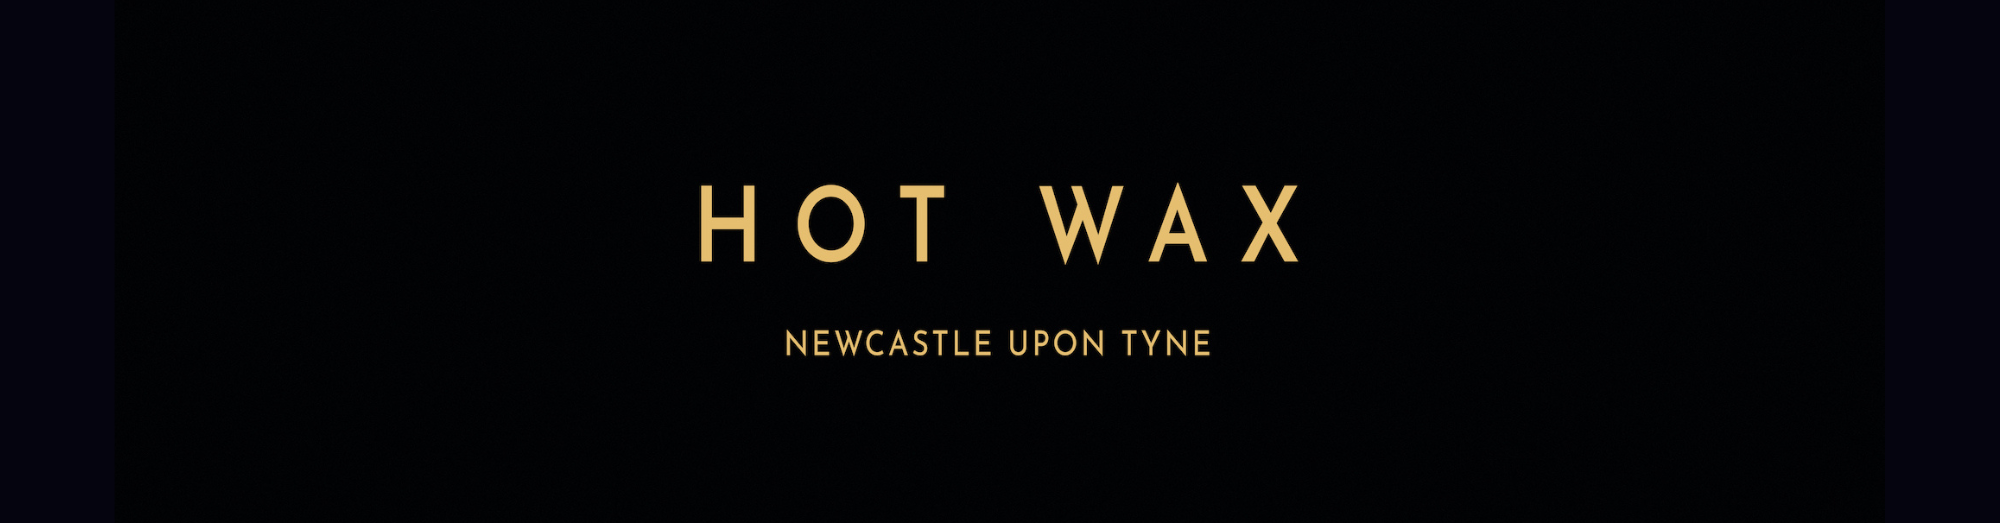 Hot Wax Newcastle